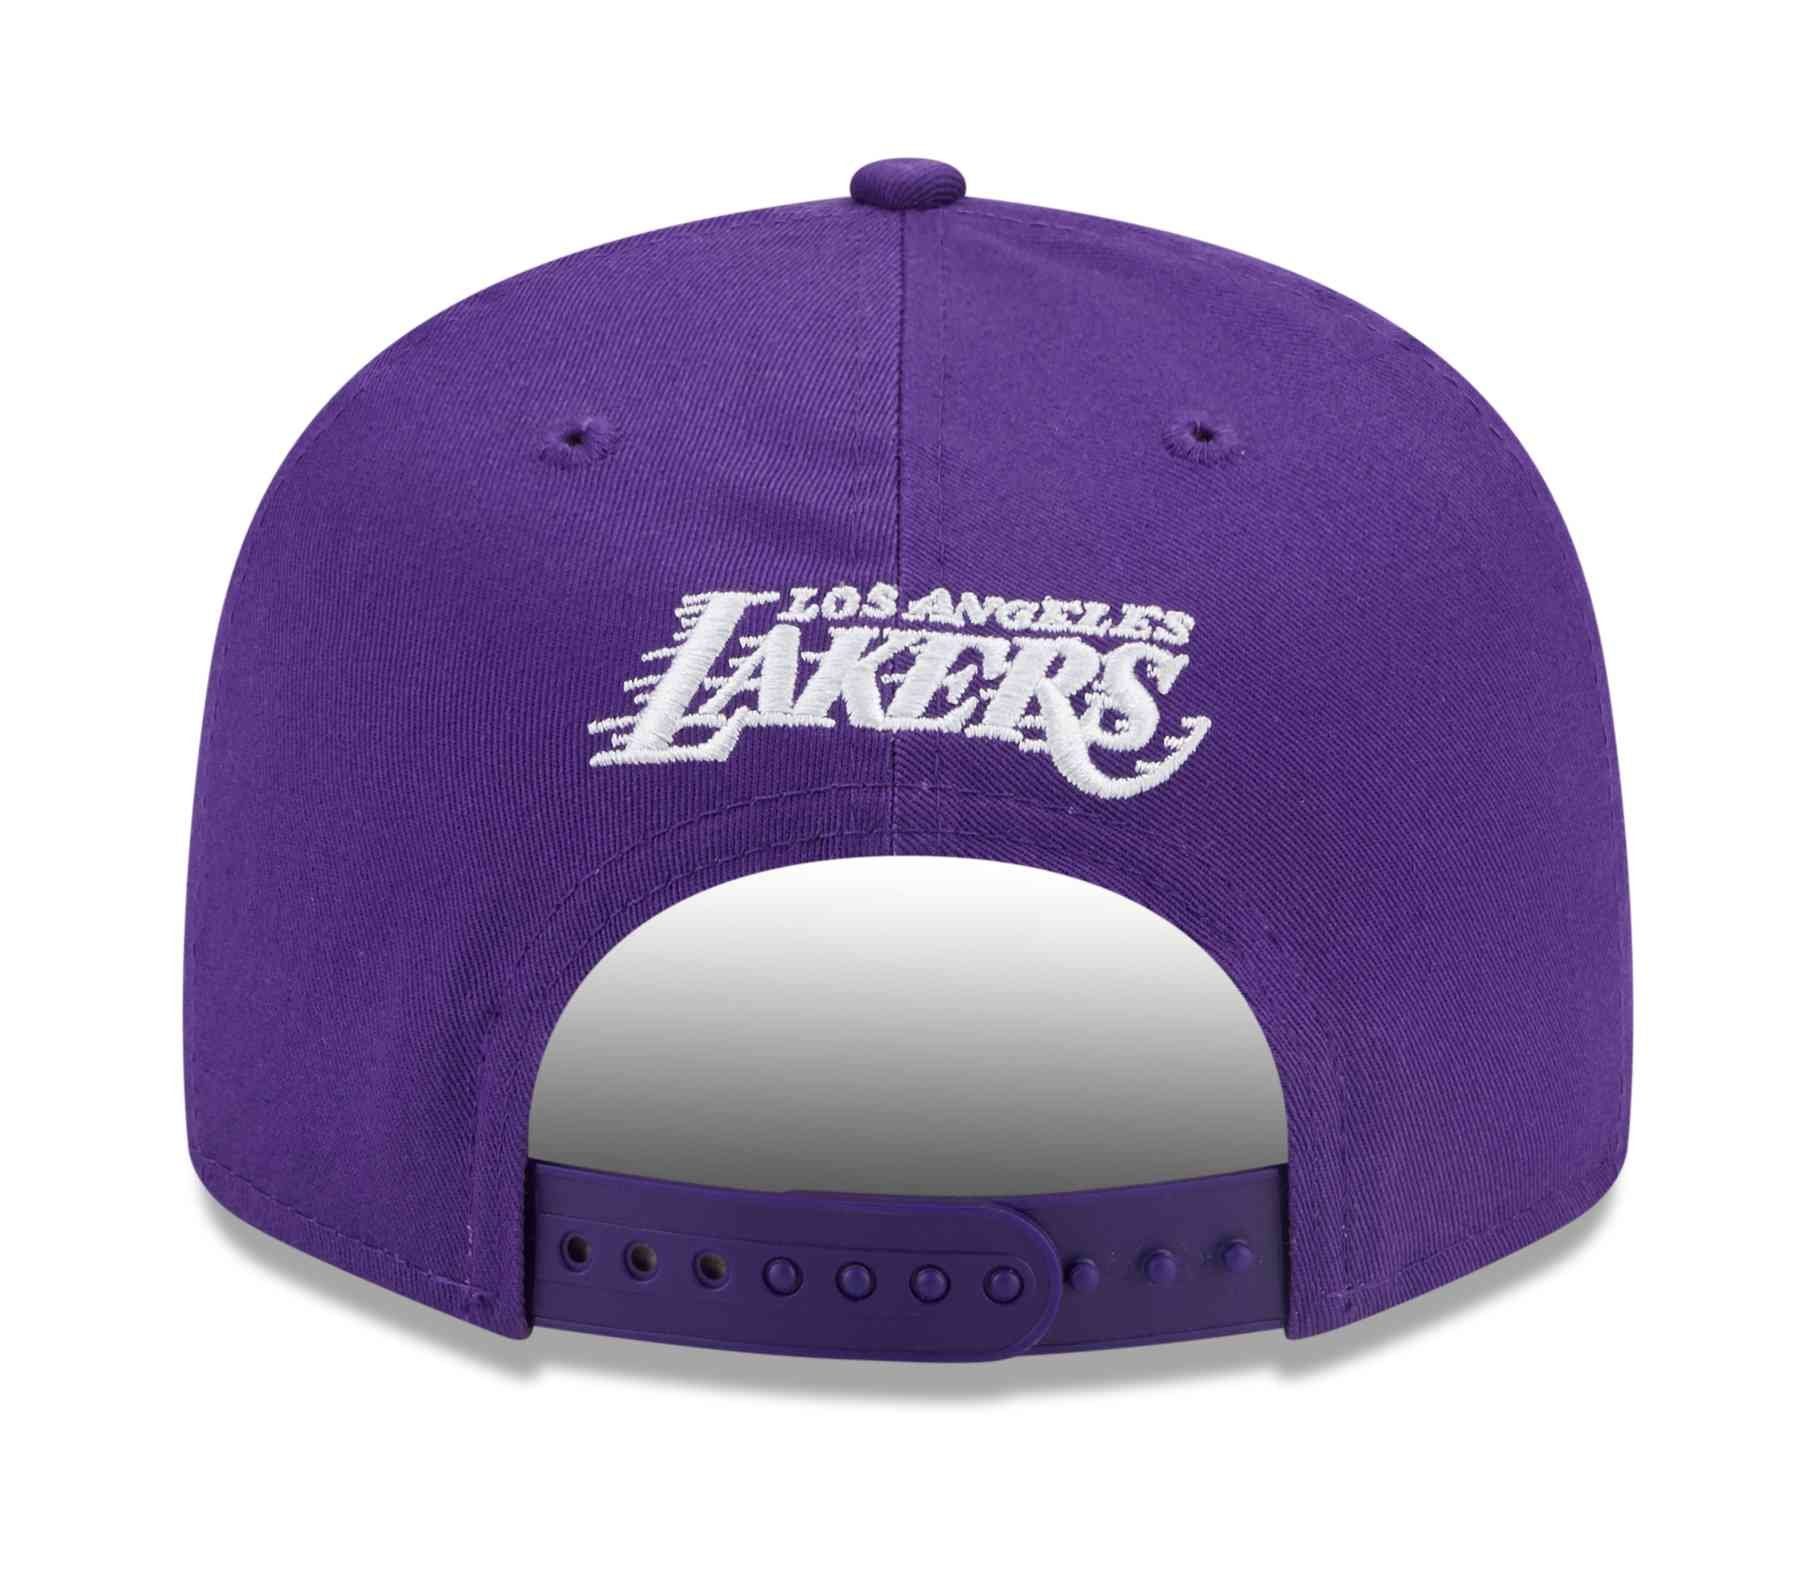 Lakers Era New 9Fifty Angeles Los NBA Cap Snapback Patch